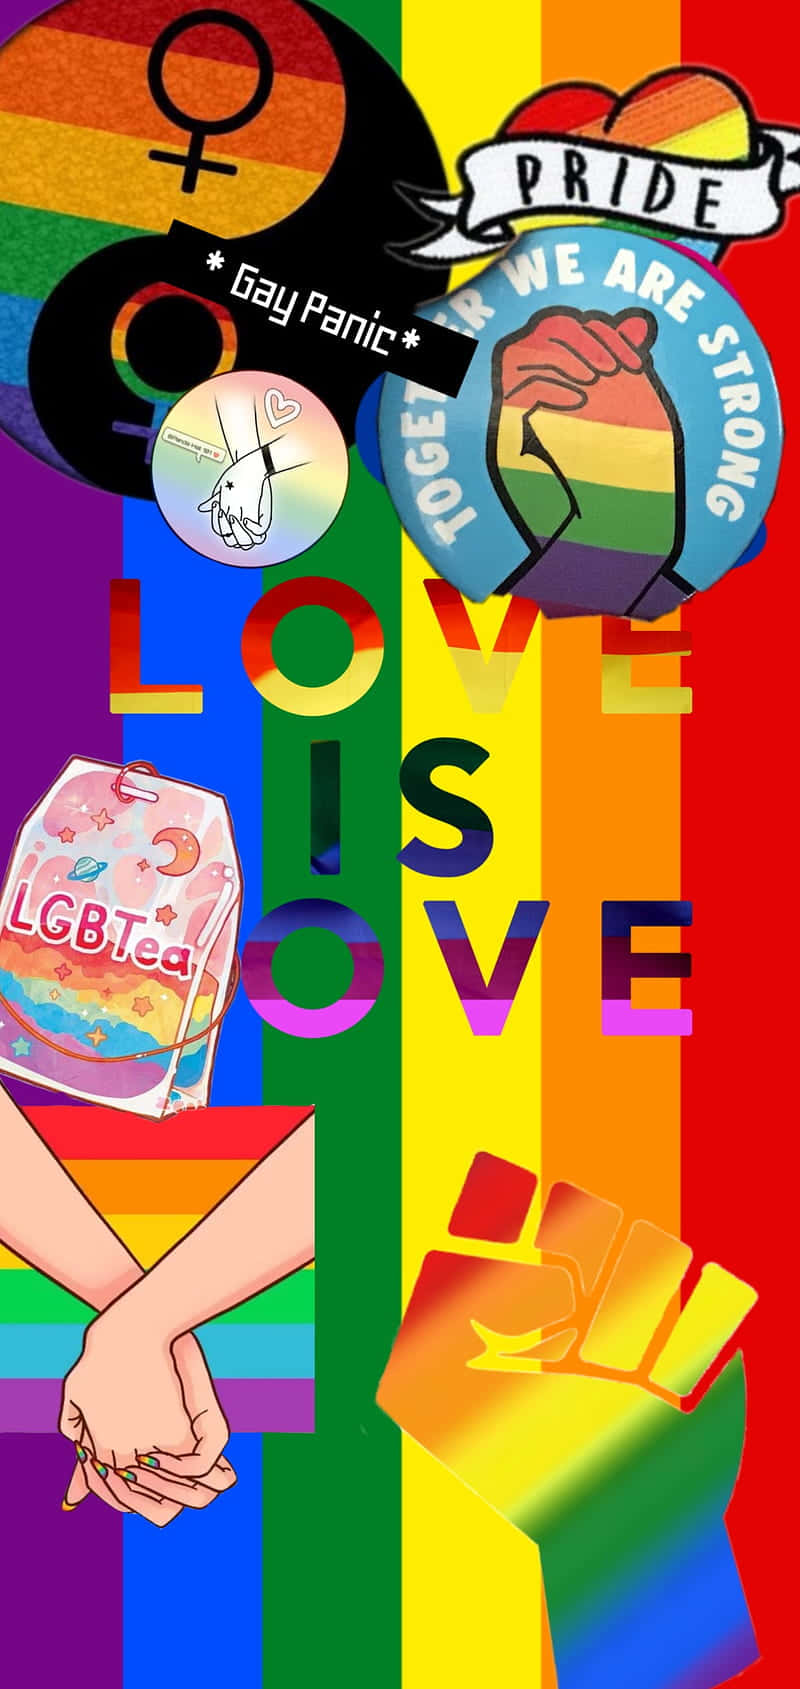 Celebrating Diversity and Love through LGBT Pride Aesthetic Illustration Wallpaper